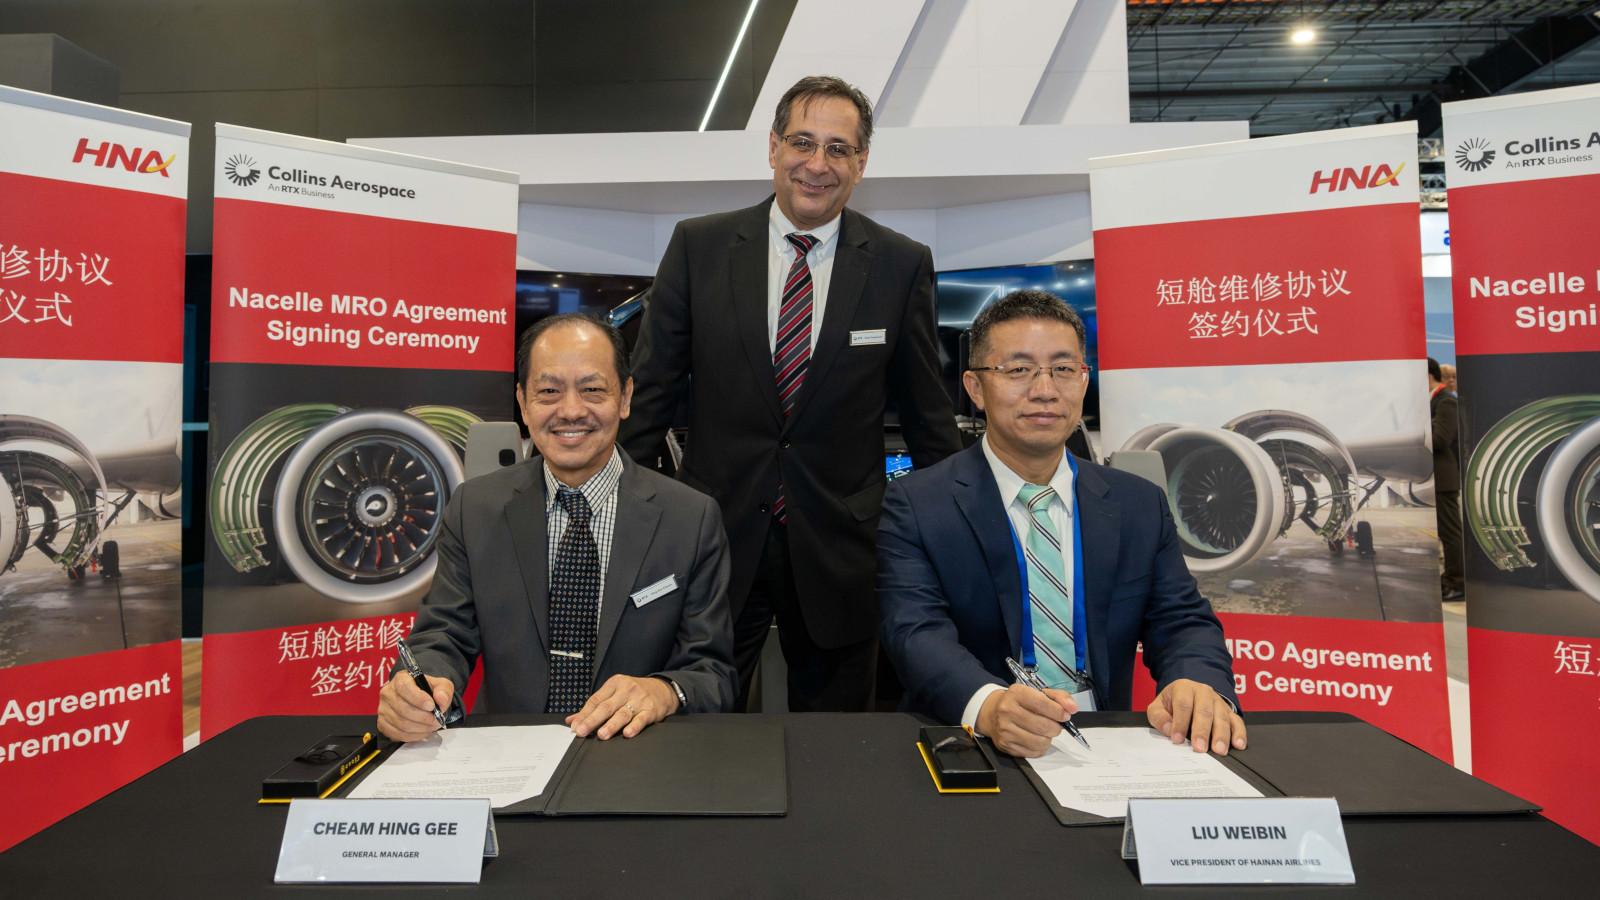 Collins Aerospace, HNA Aviation Group Announce MRO Agreement